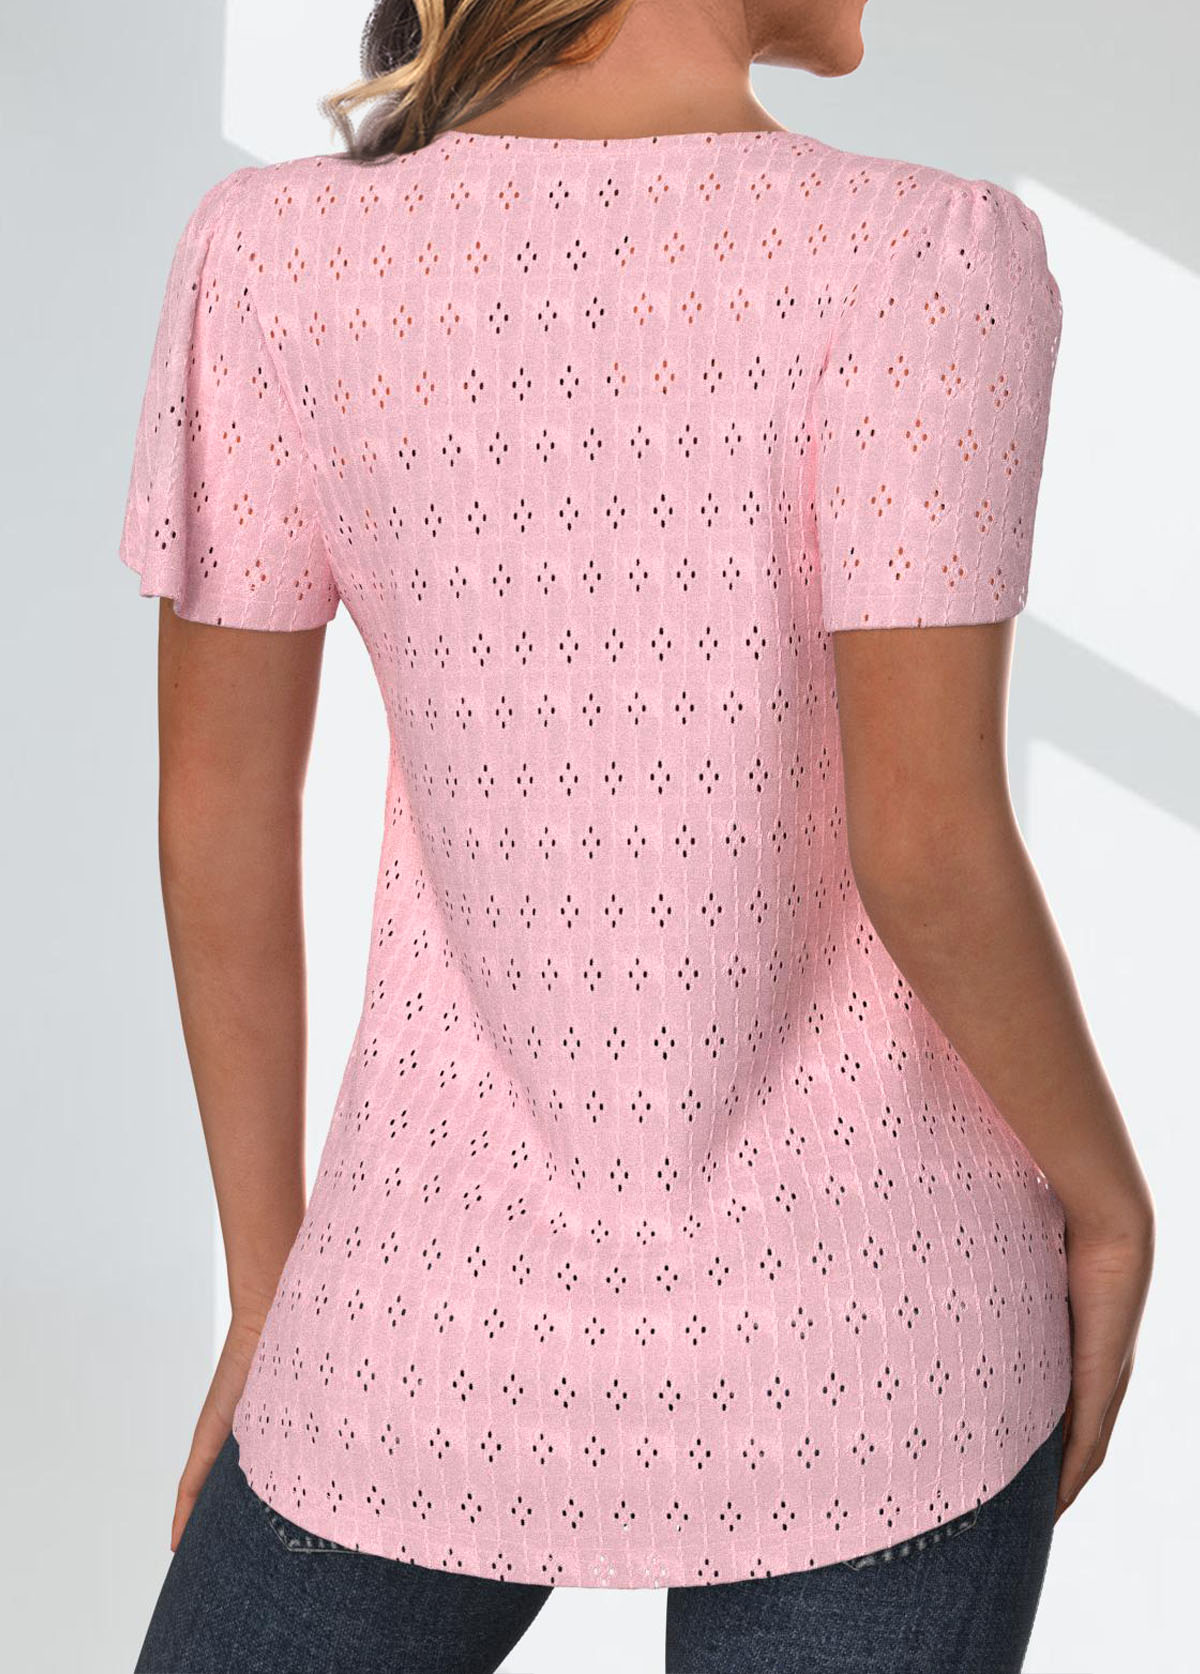 Lace Light Pink Short Sleeve Round Neck T Shirt